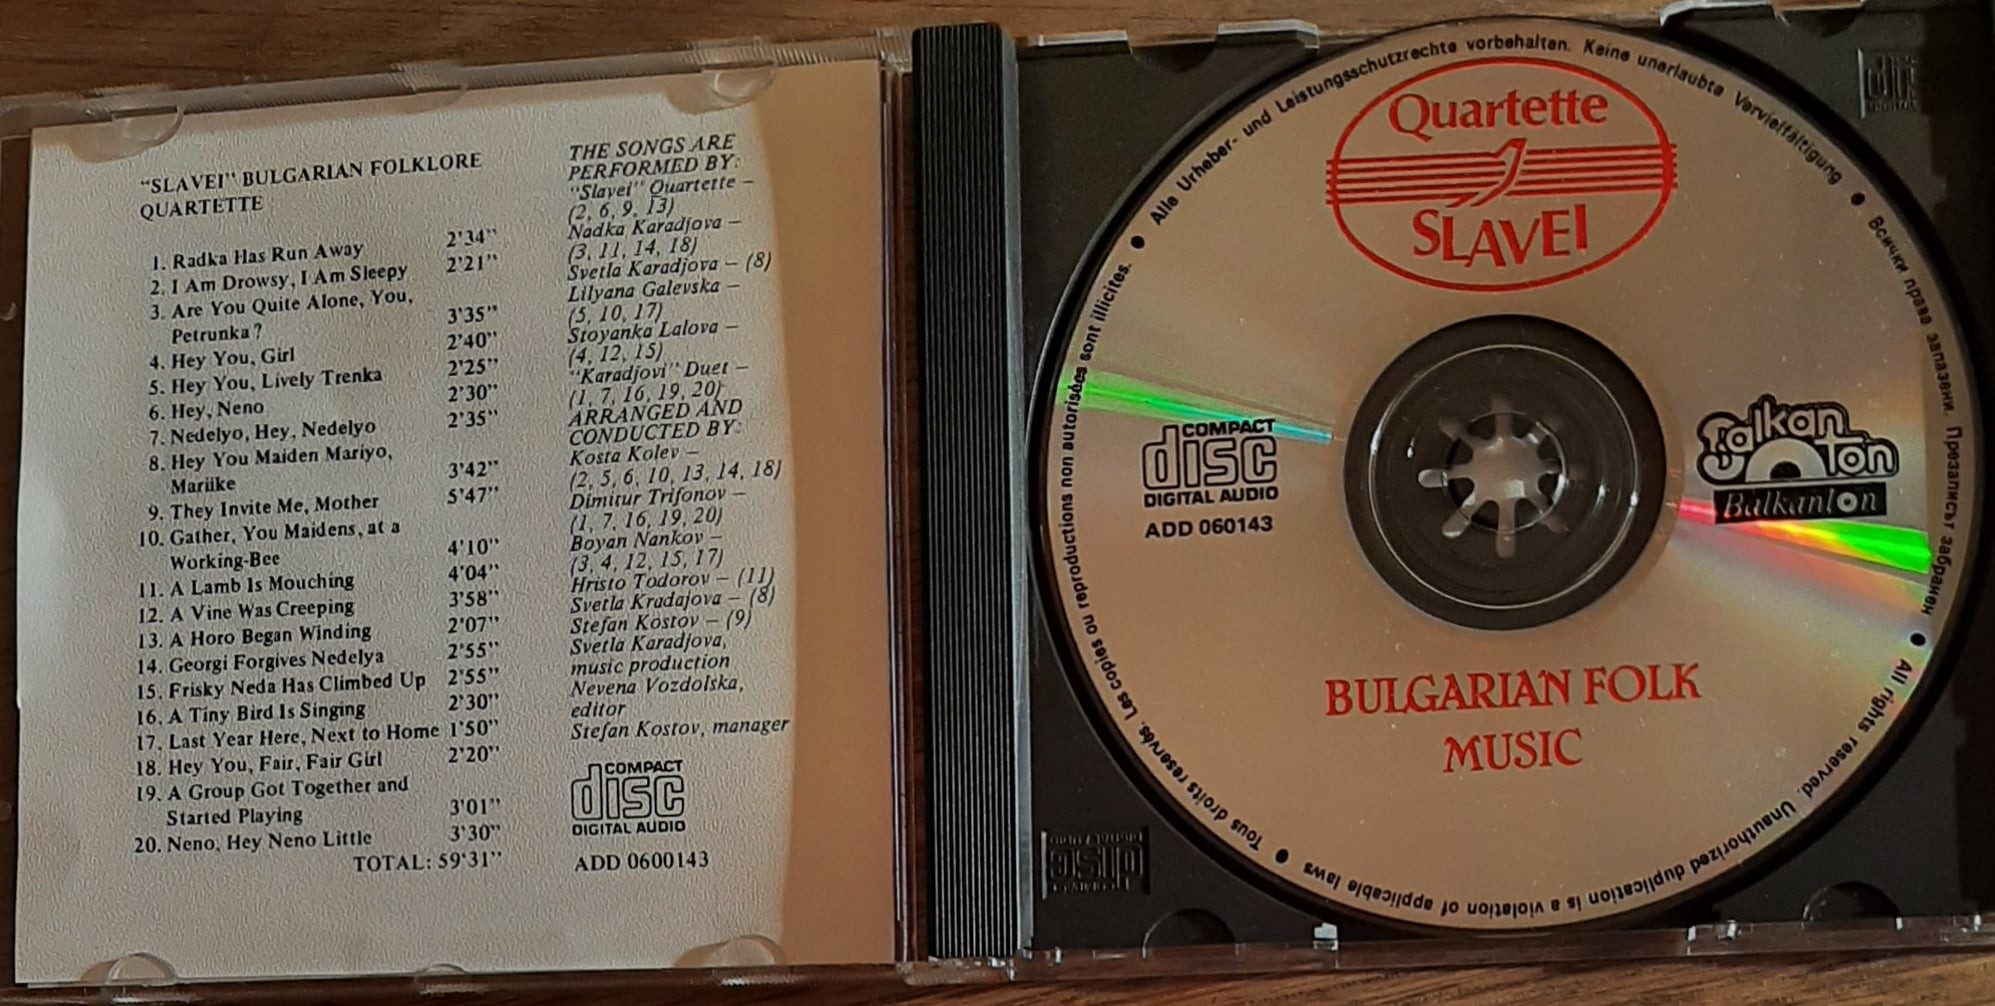 Quartette Slavei - Bulgarian Folk Music